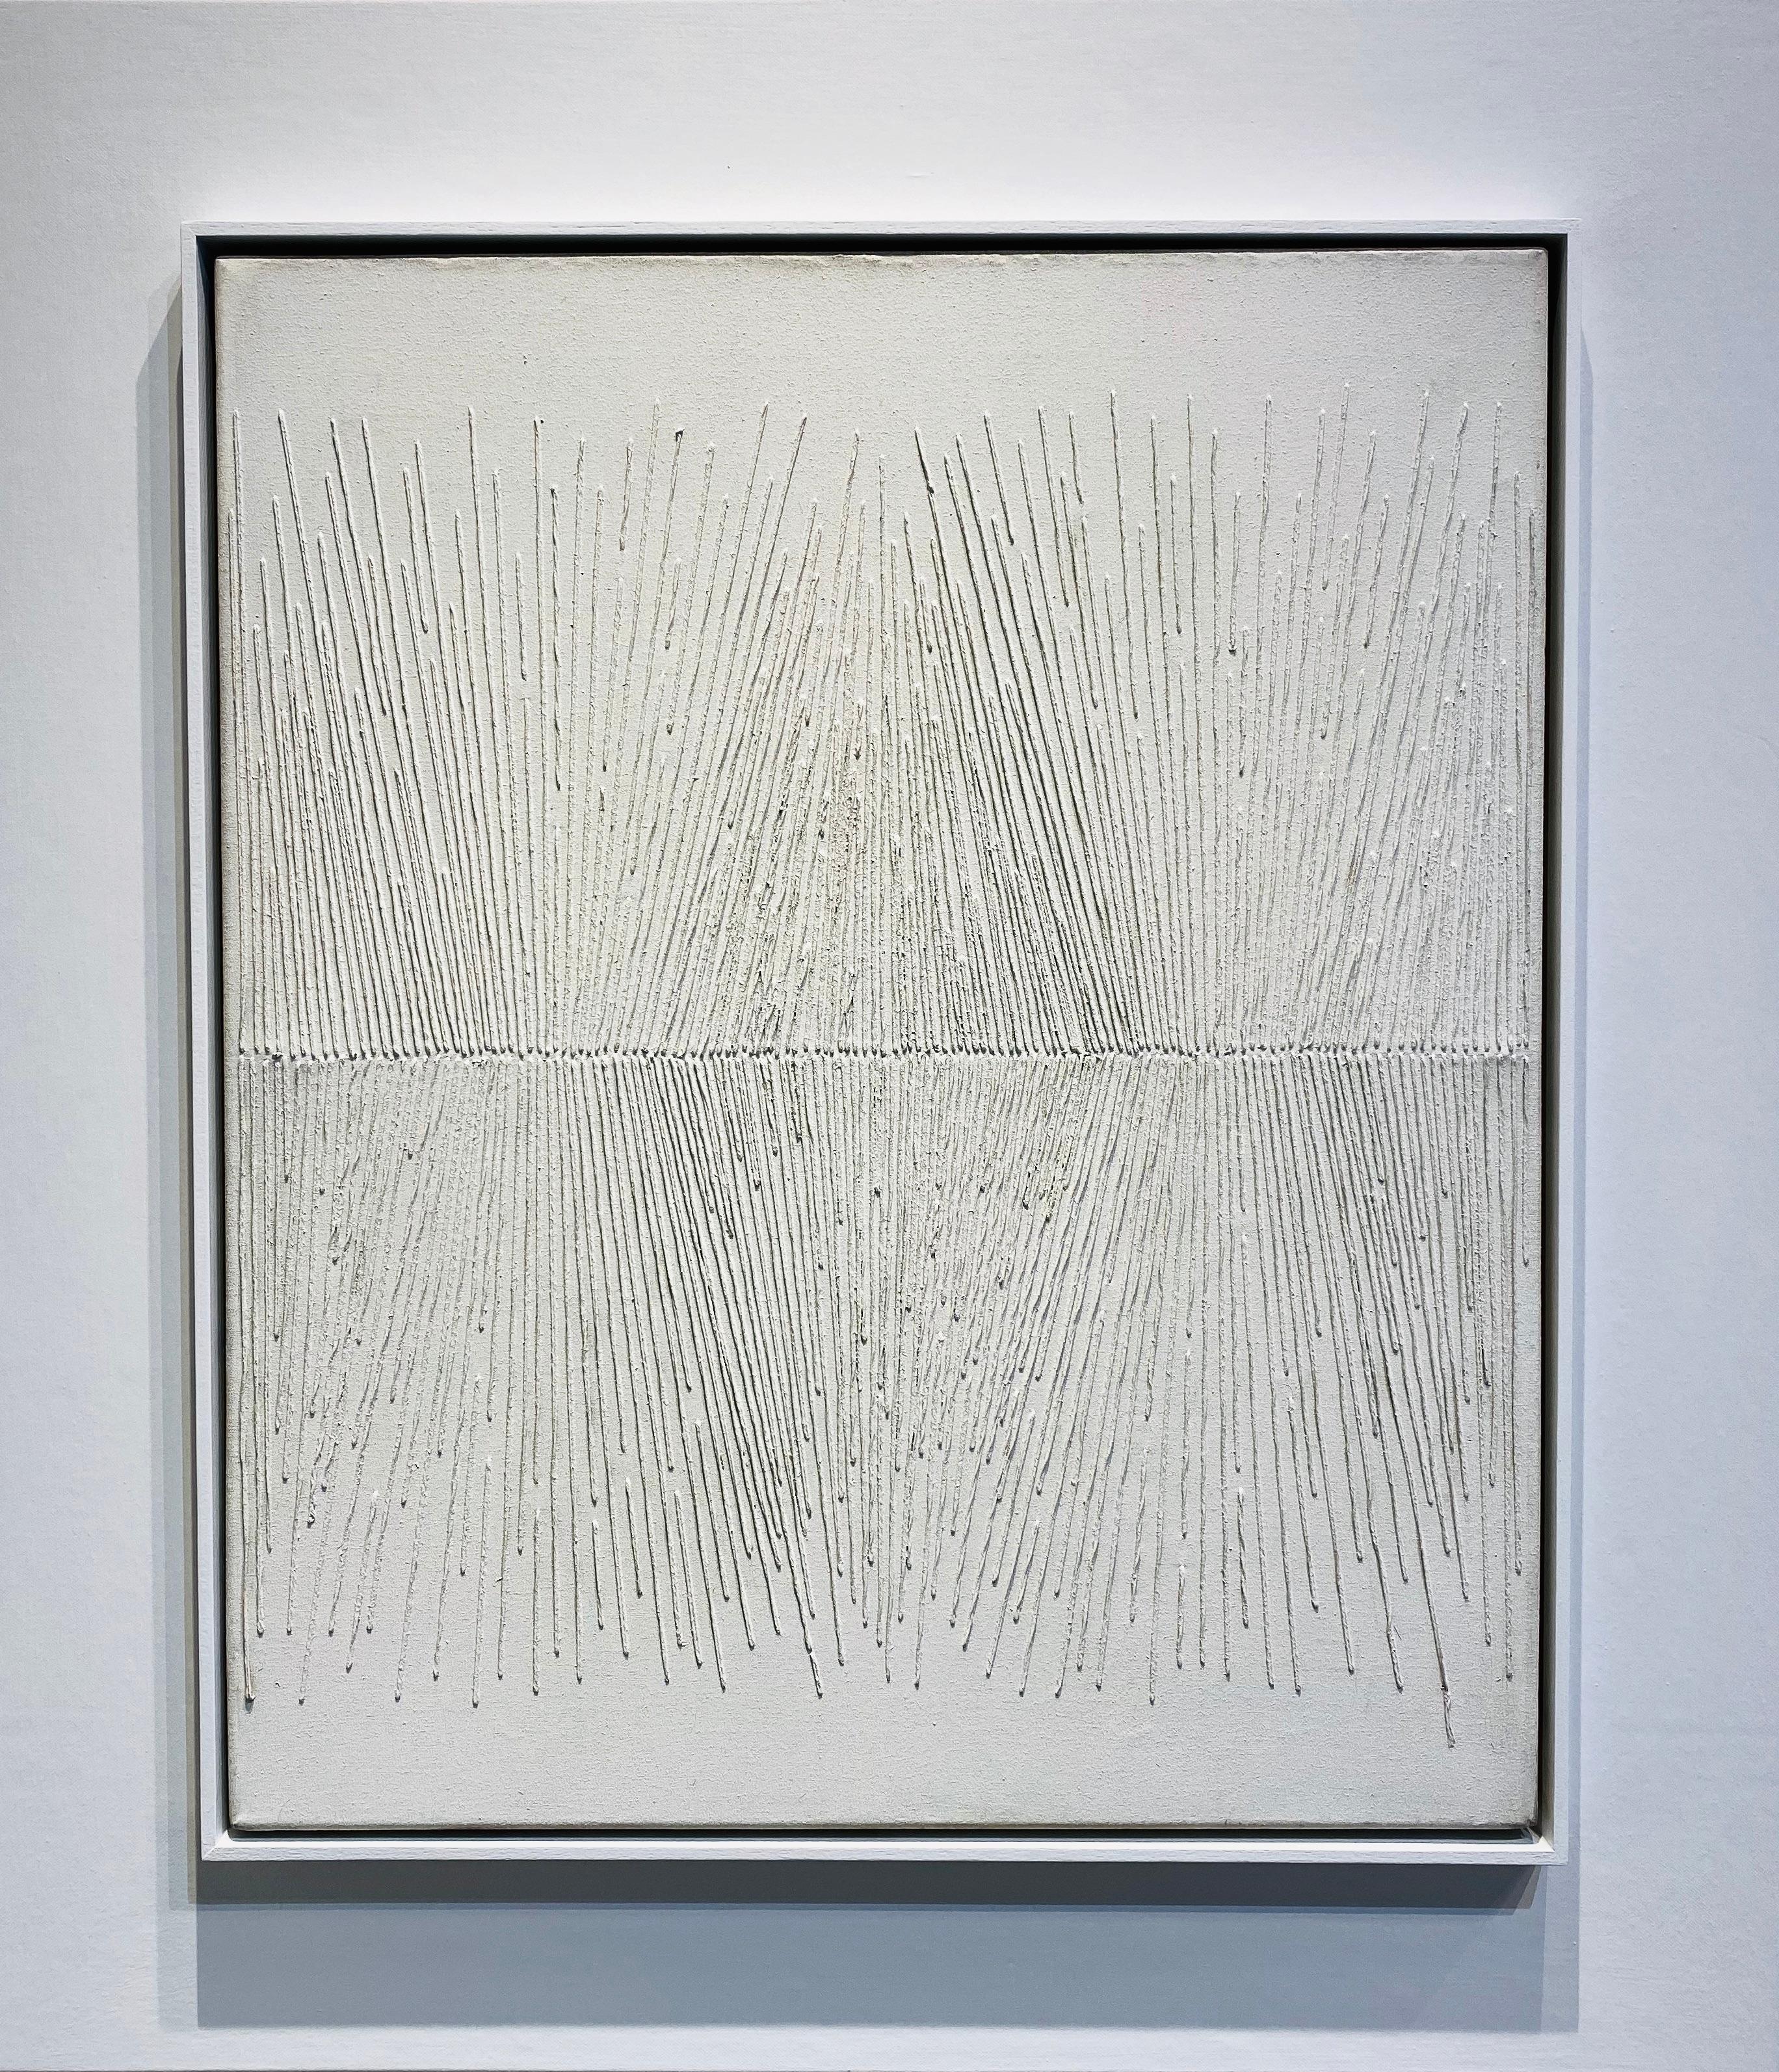 Twisted Strings 1965/68, Op Art, Kinetic Art, Zero Group, Avantgarde, Minimalism - Painting by Walter Leblanc